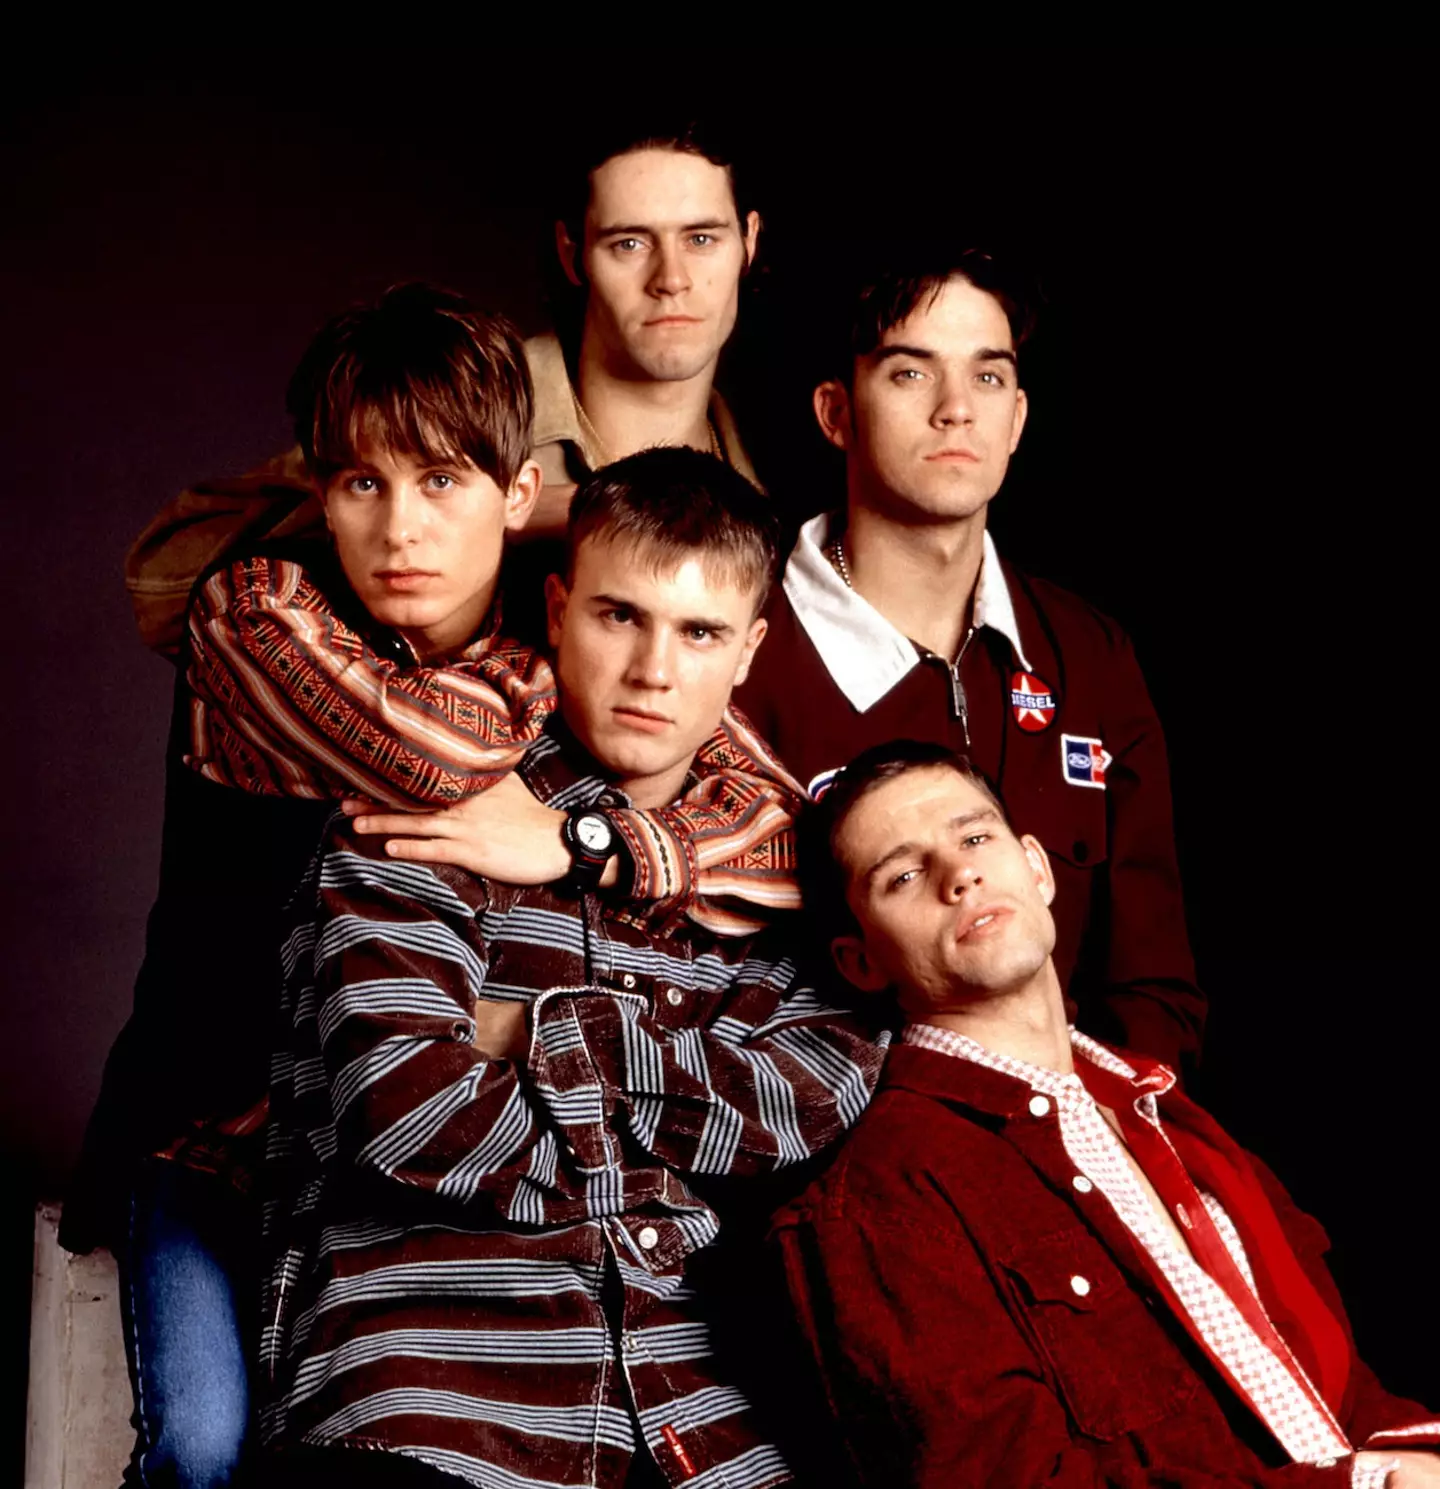 The original group consisted of Gary Barlow, Howard Donald, Mark Owen, Jason Orange and Robbie Williams.